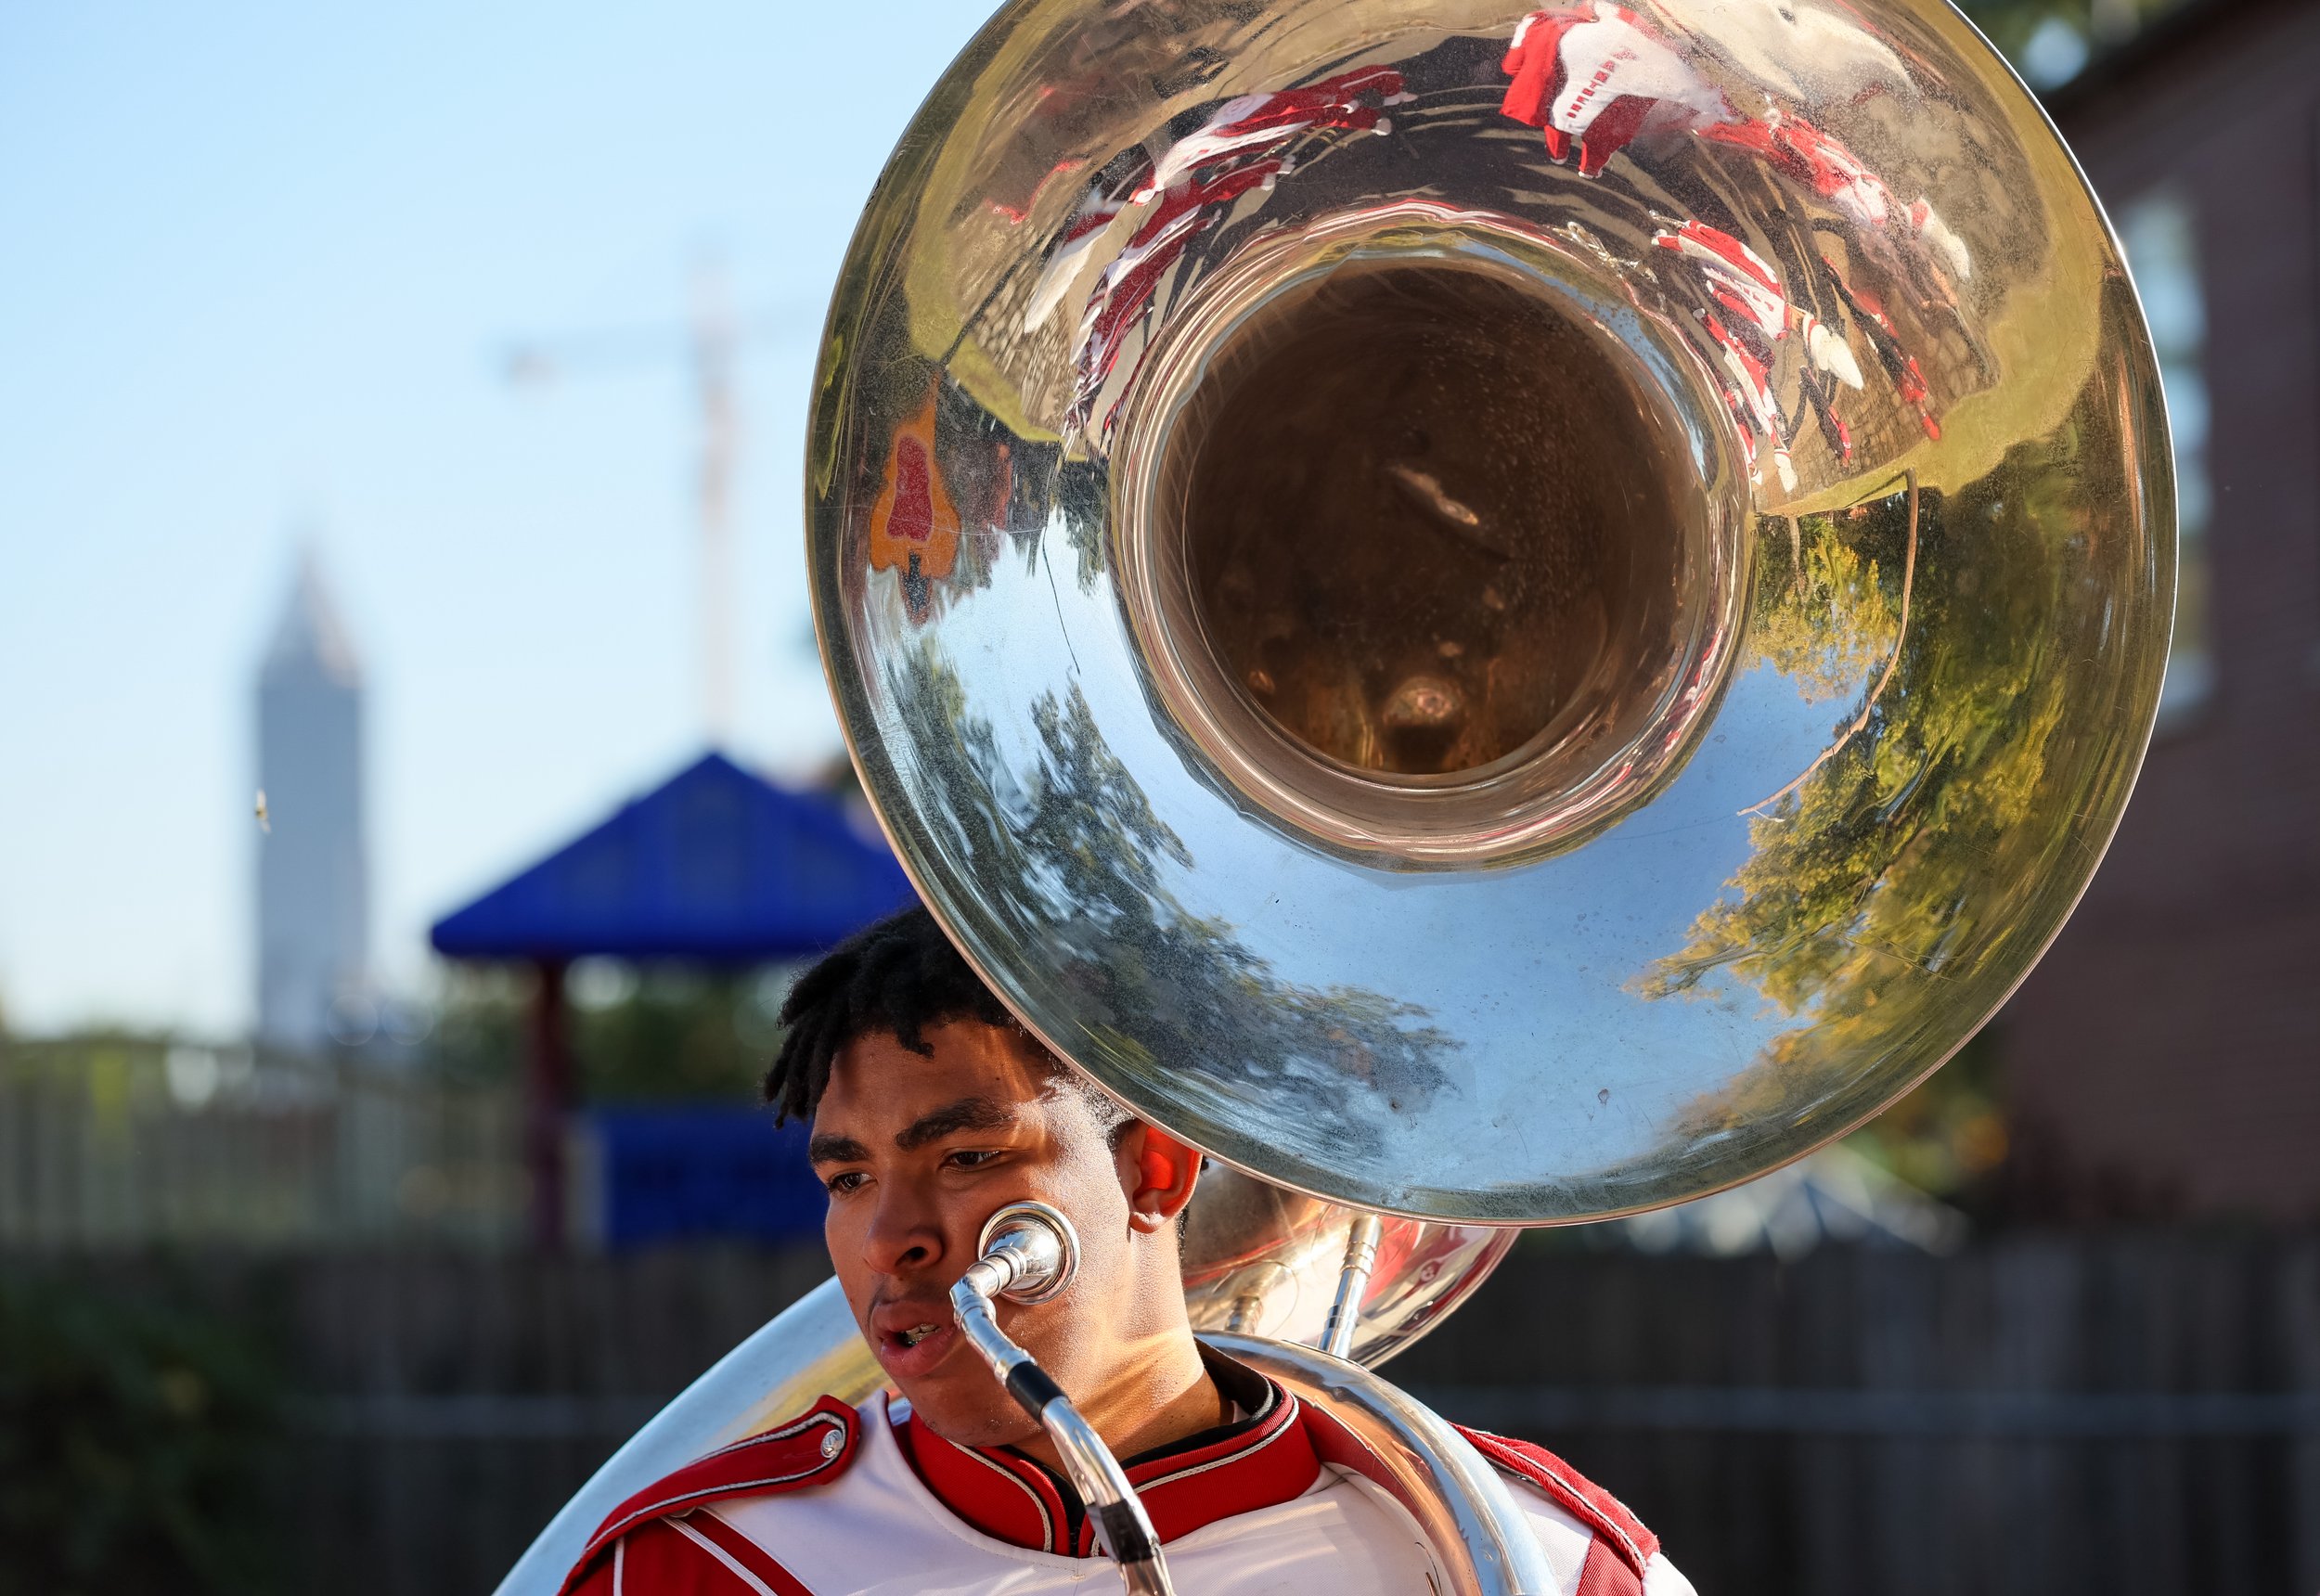  Dimani Dais, a tuba player for the Clark Atlanta University marching band, waits before the homecoming parade in Atlanta on Saturday, October 15, 2022. 